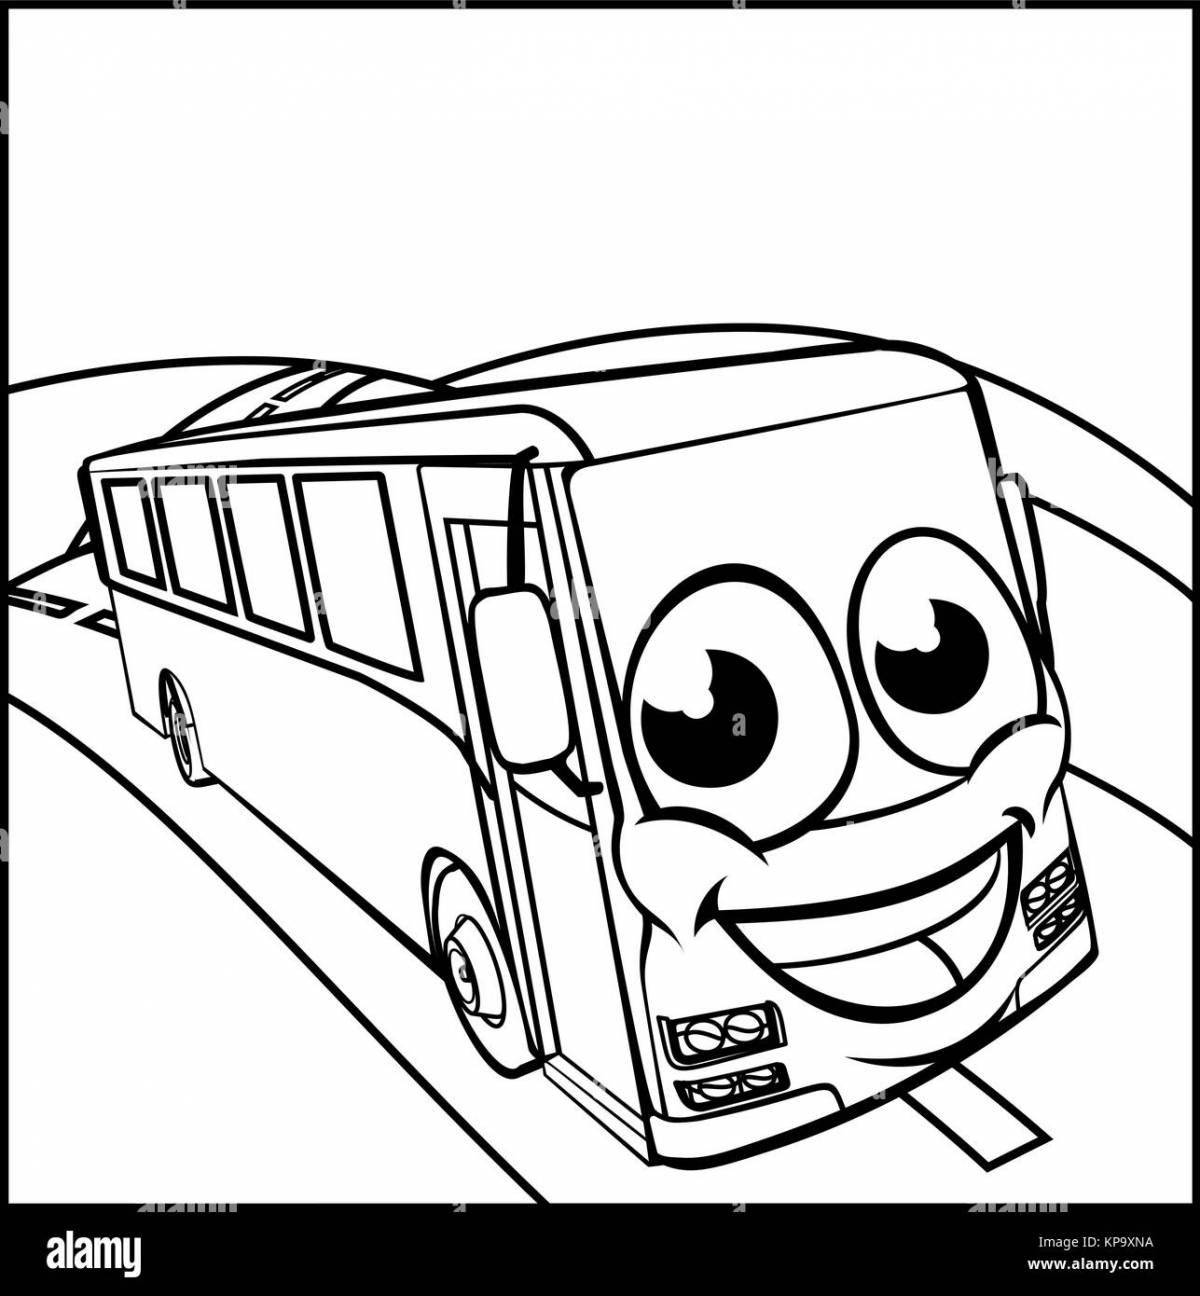 Glorious gordon bus coloring page